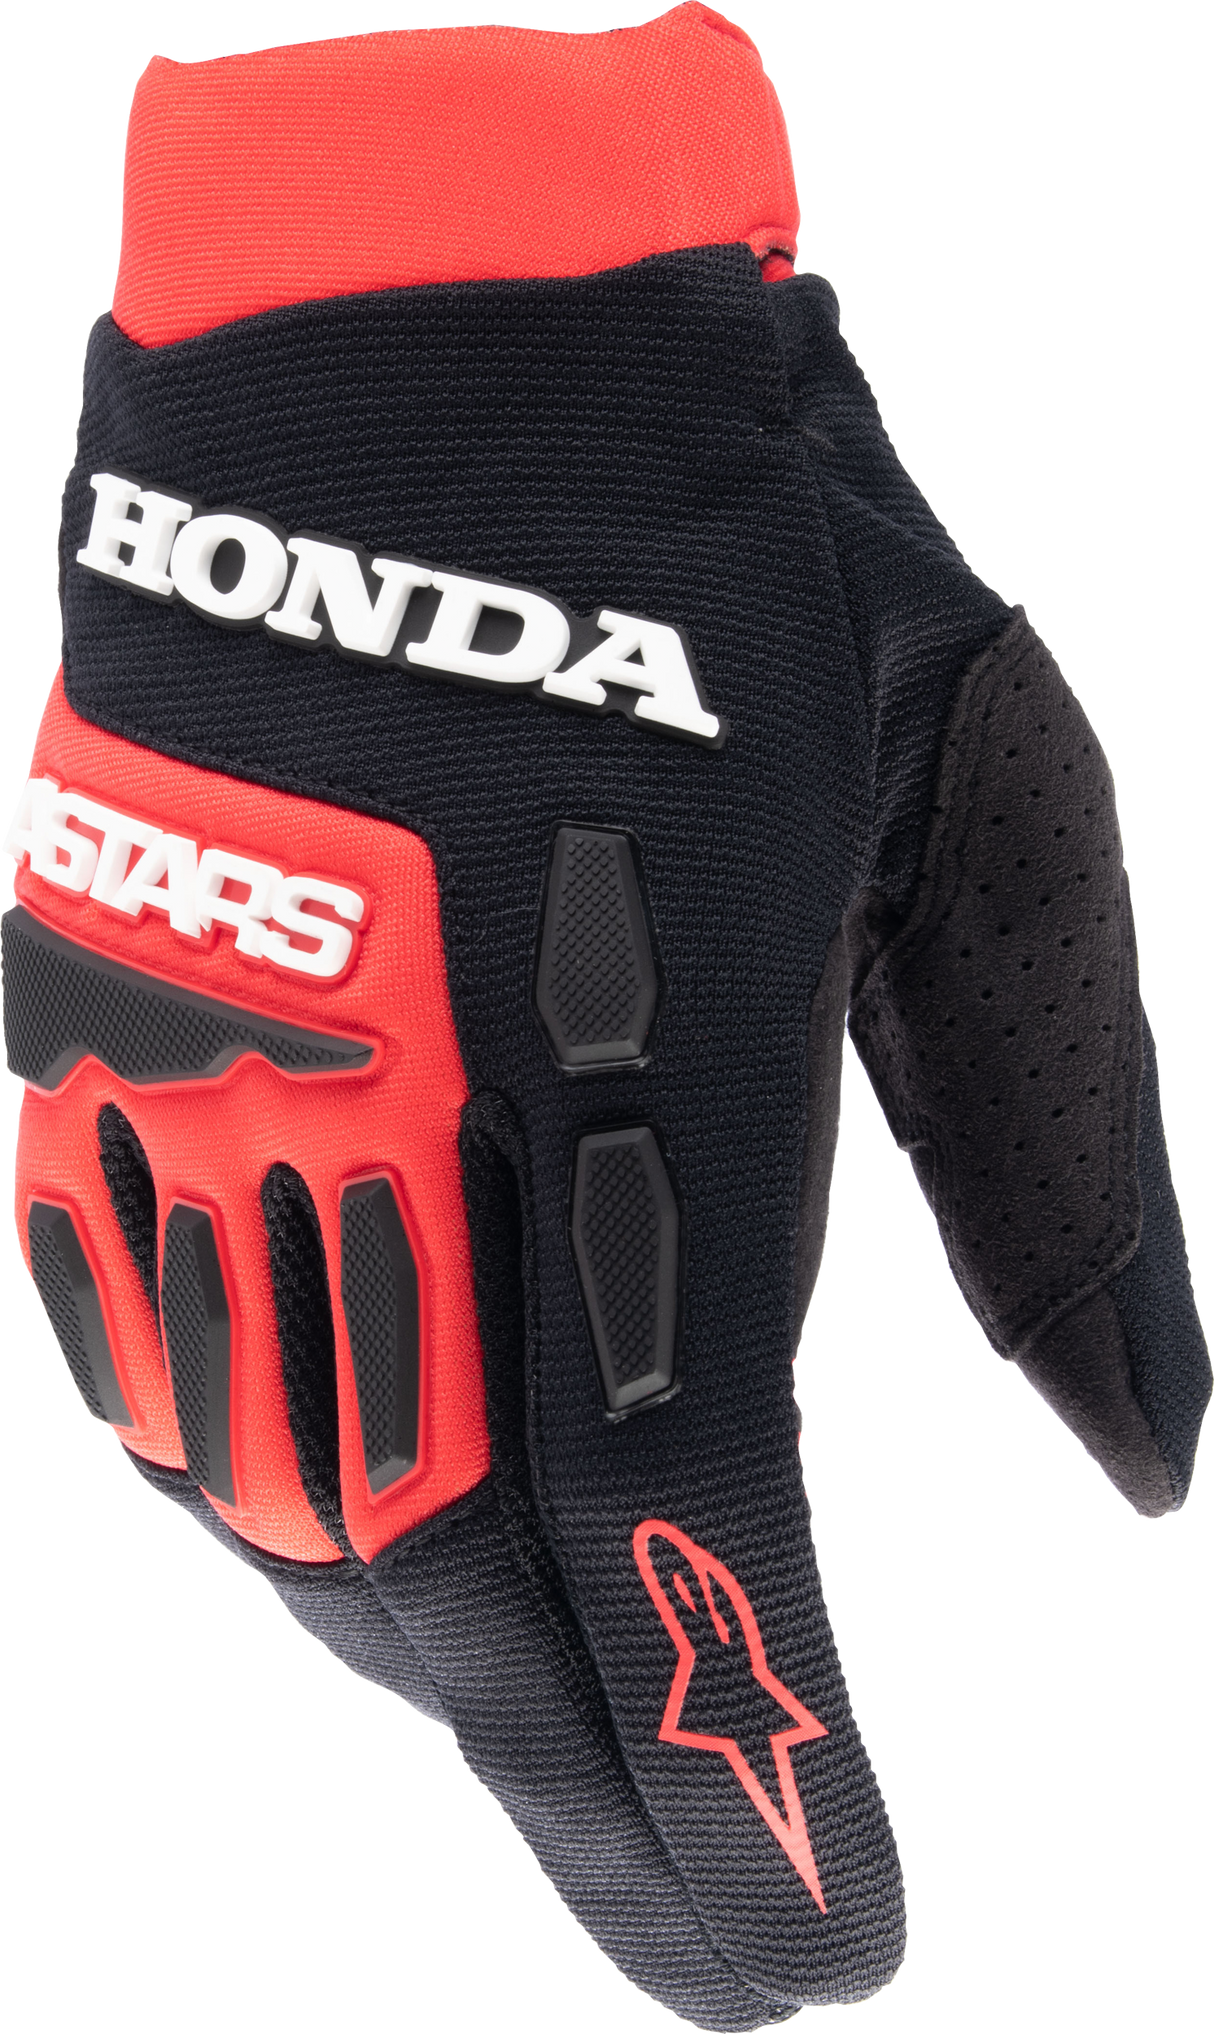 Honda Full Bore Gloves Bright Red/Black 4x